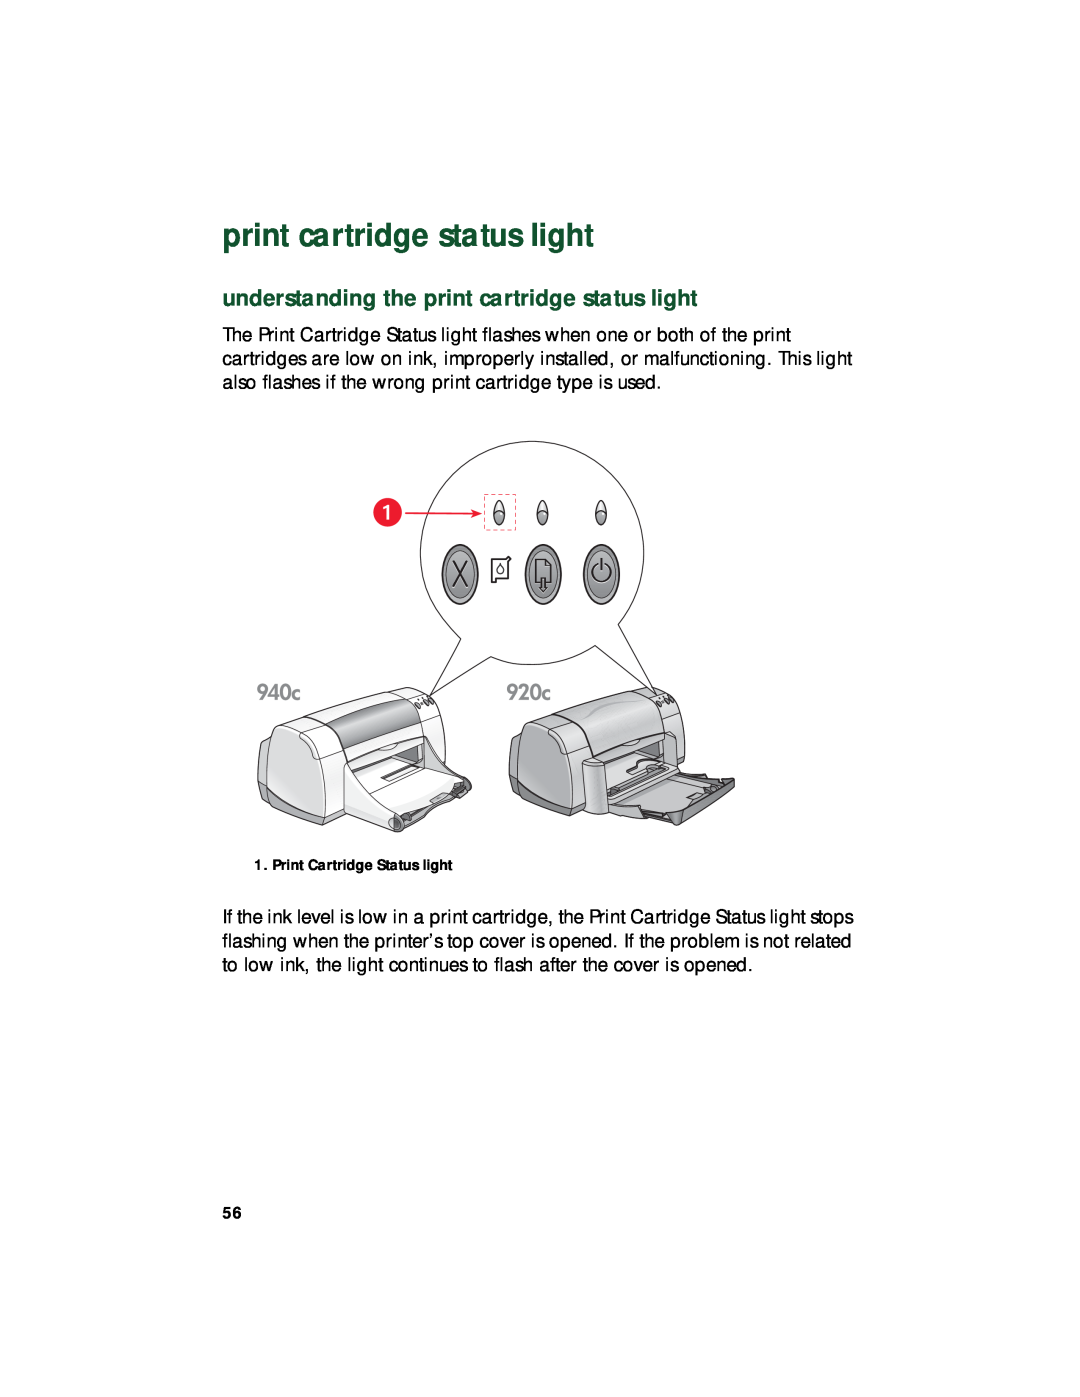 HP 948c, 920c, 940c manual understanding the print cartridge status light 